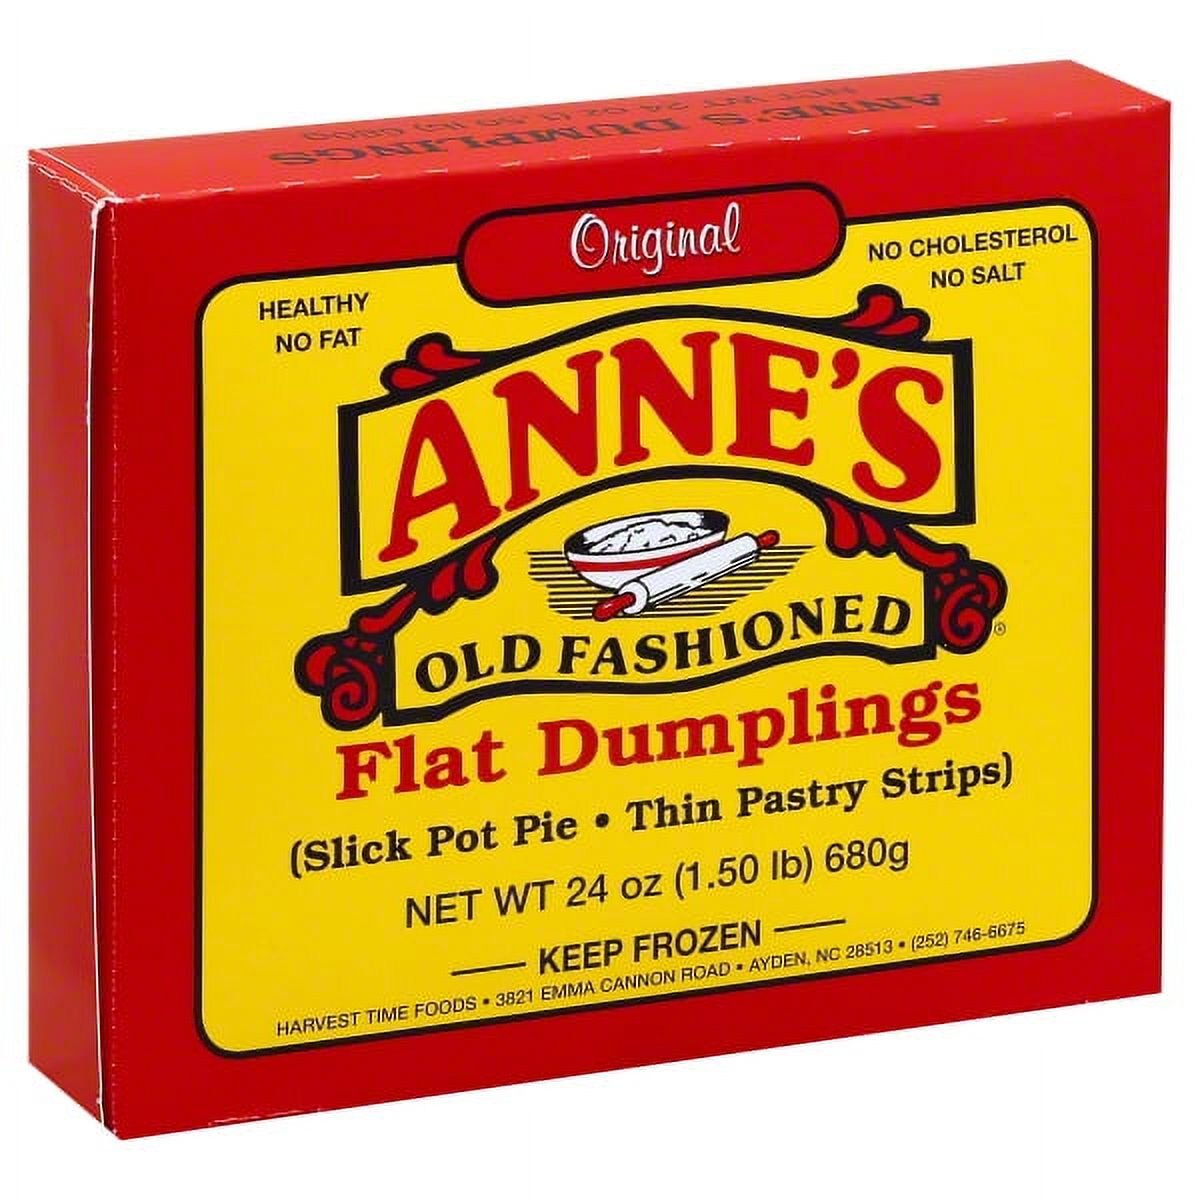 Anne's Flat Dumplings Old Fashioned, Box, 24.0 oz - image 1 of 7